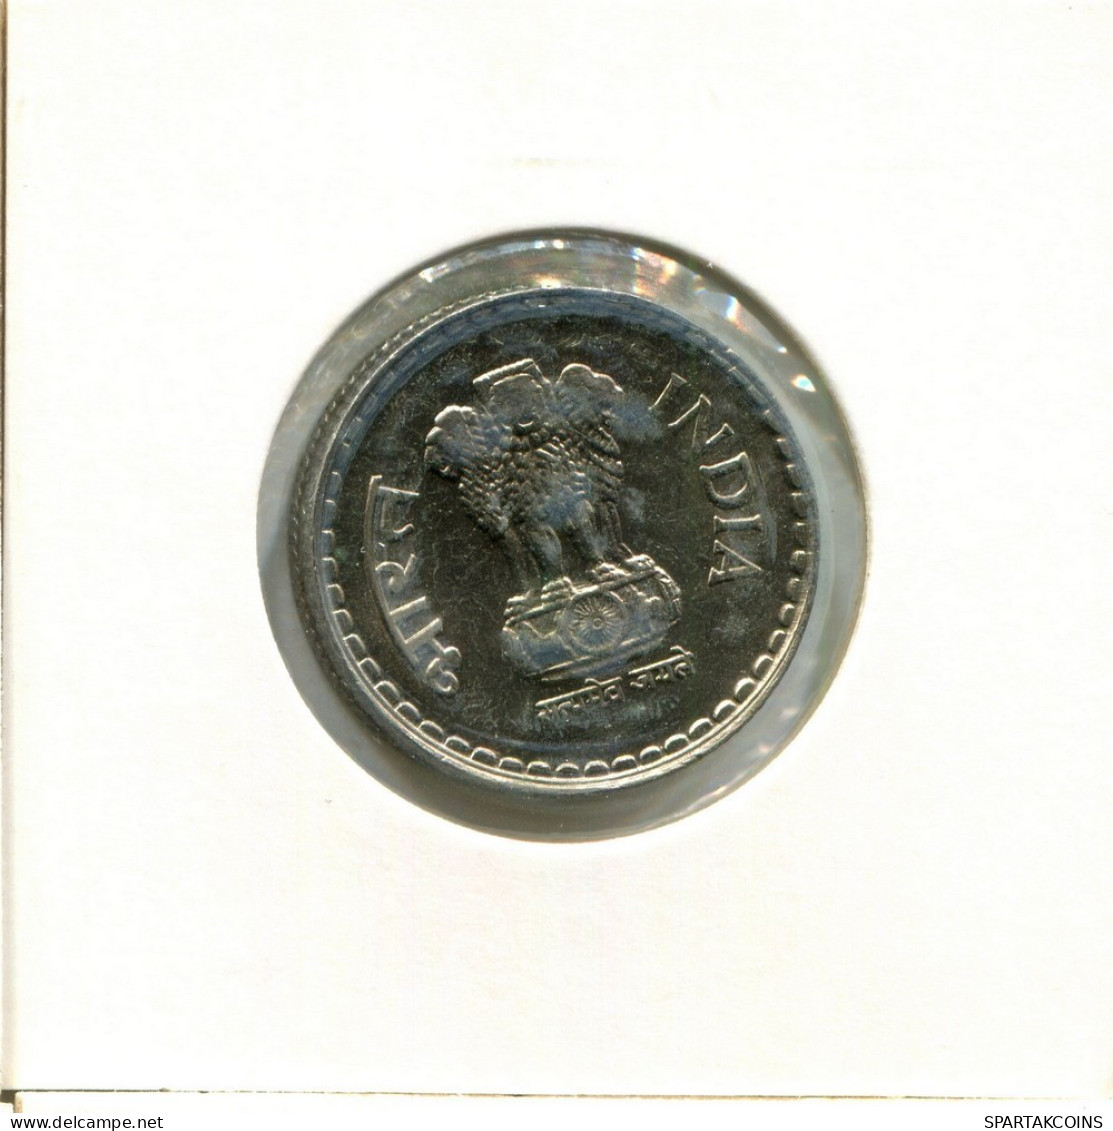 5 RUPEES 1997 INDIEN INDIA Münze #AY842.D.A - India